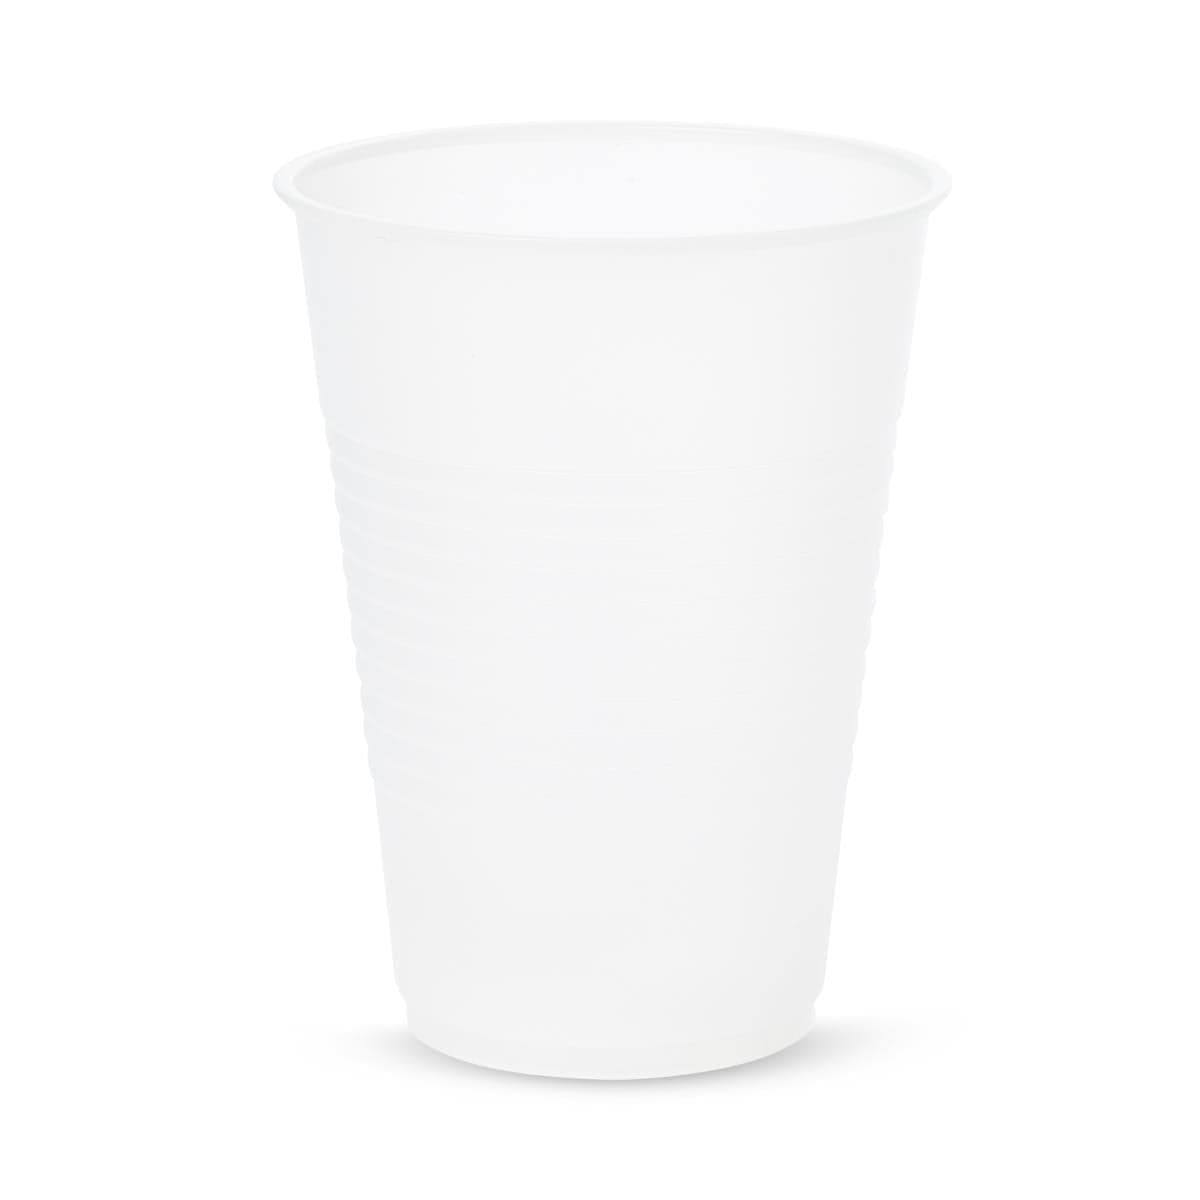 Medline Medline Disposable Plastic Drinking Cups NON03009